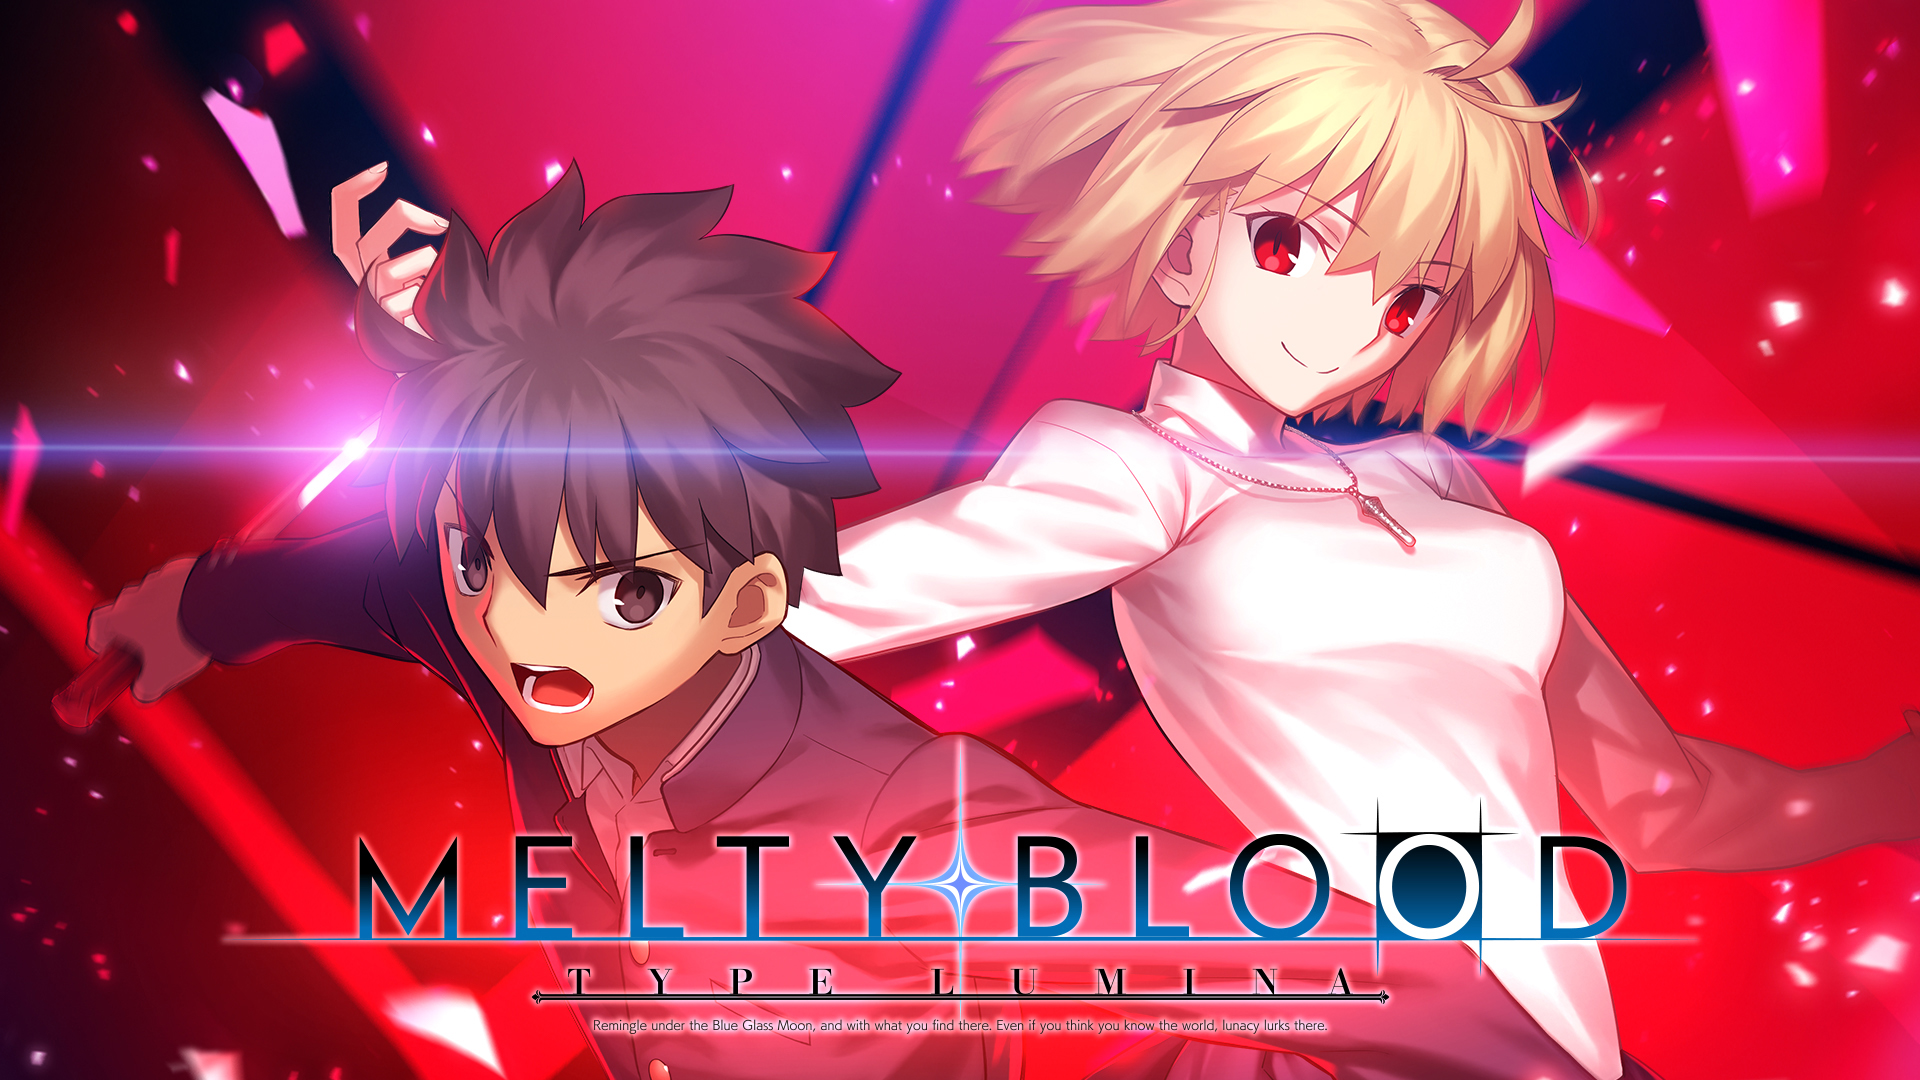 Melty Blood Type Lumina Nintendo Switch Eshop Download